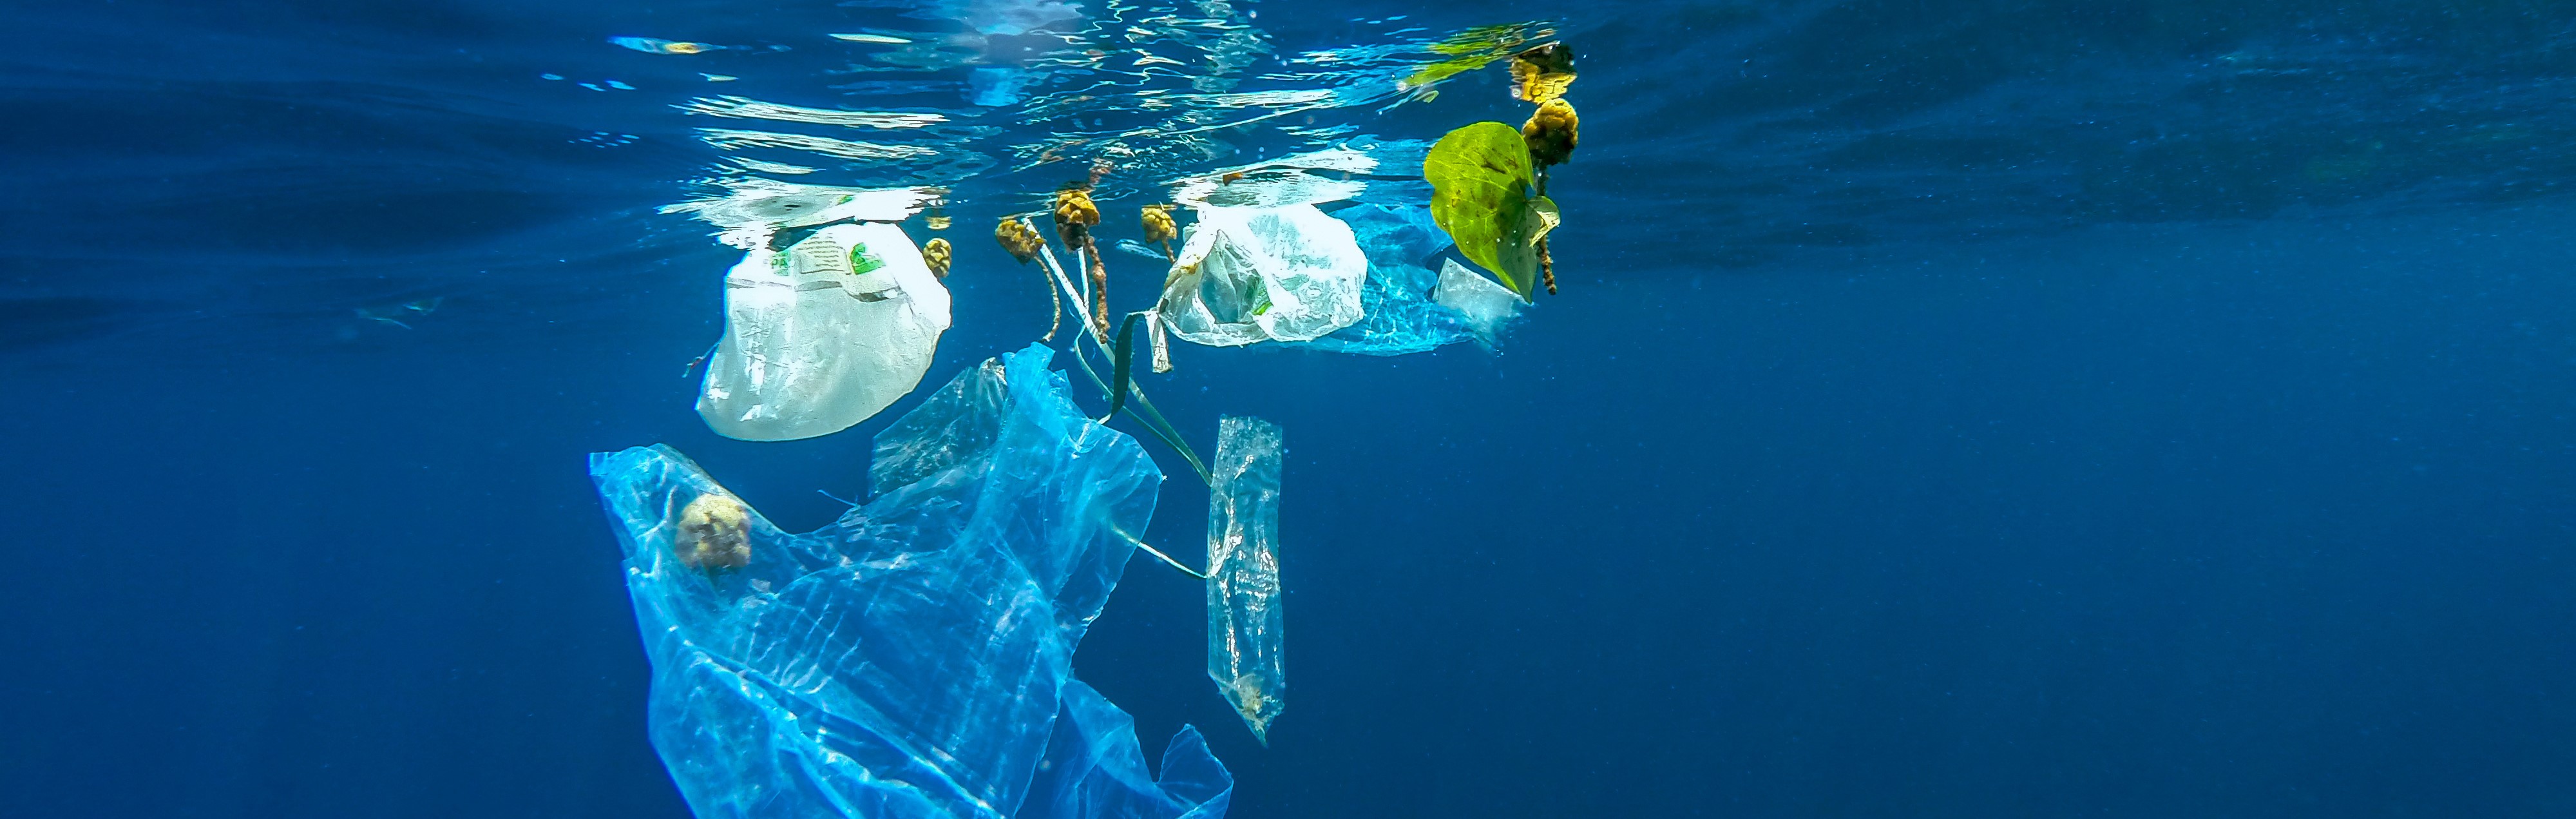 Marine pollution of plastic